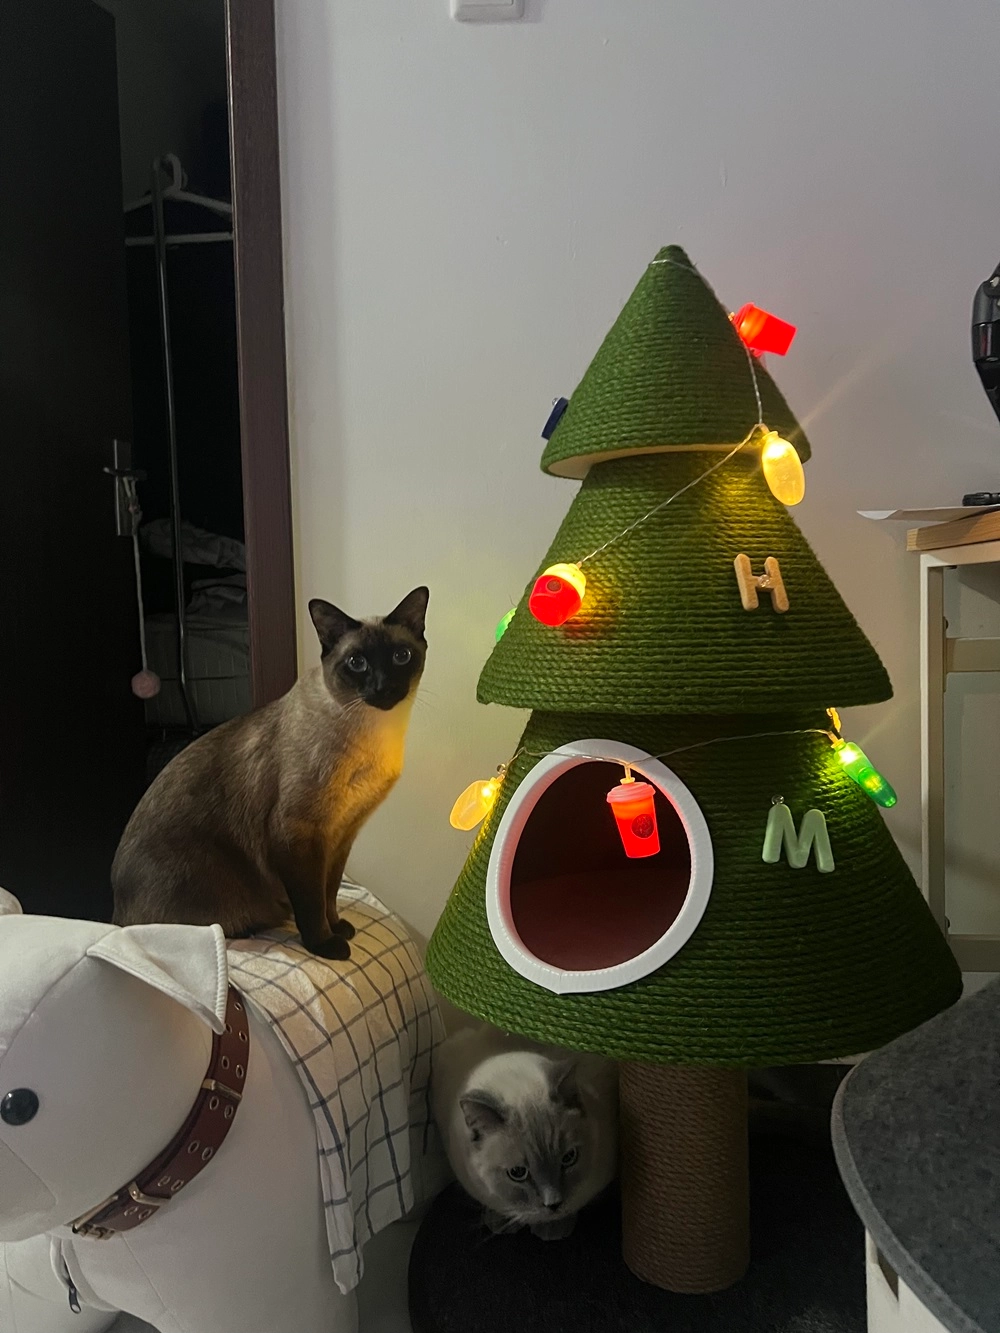 A light up Christmas cat tree